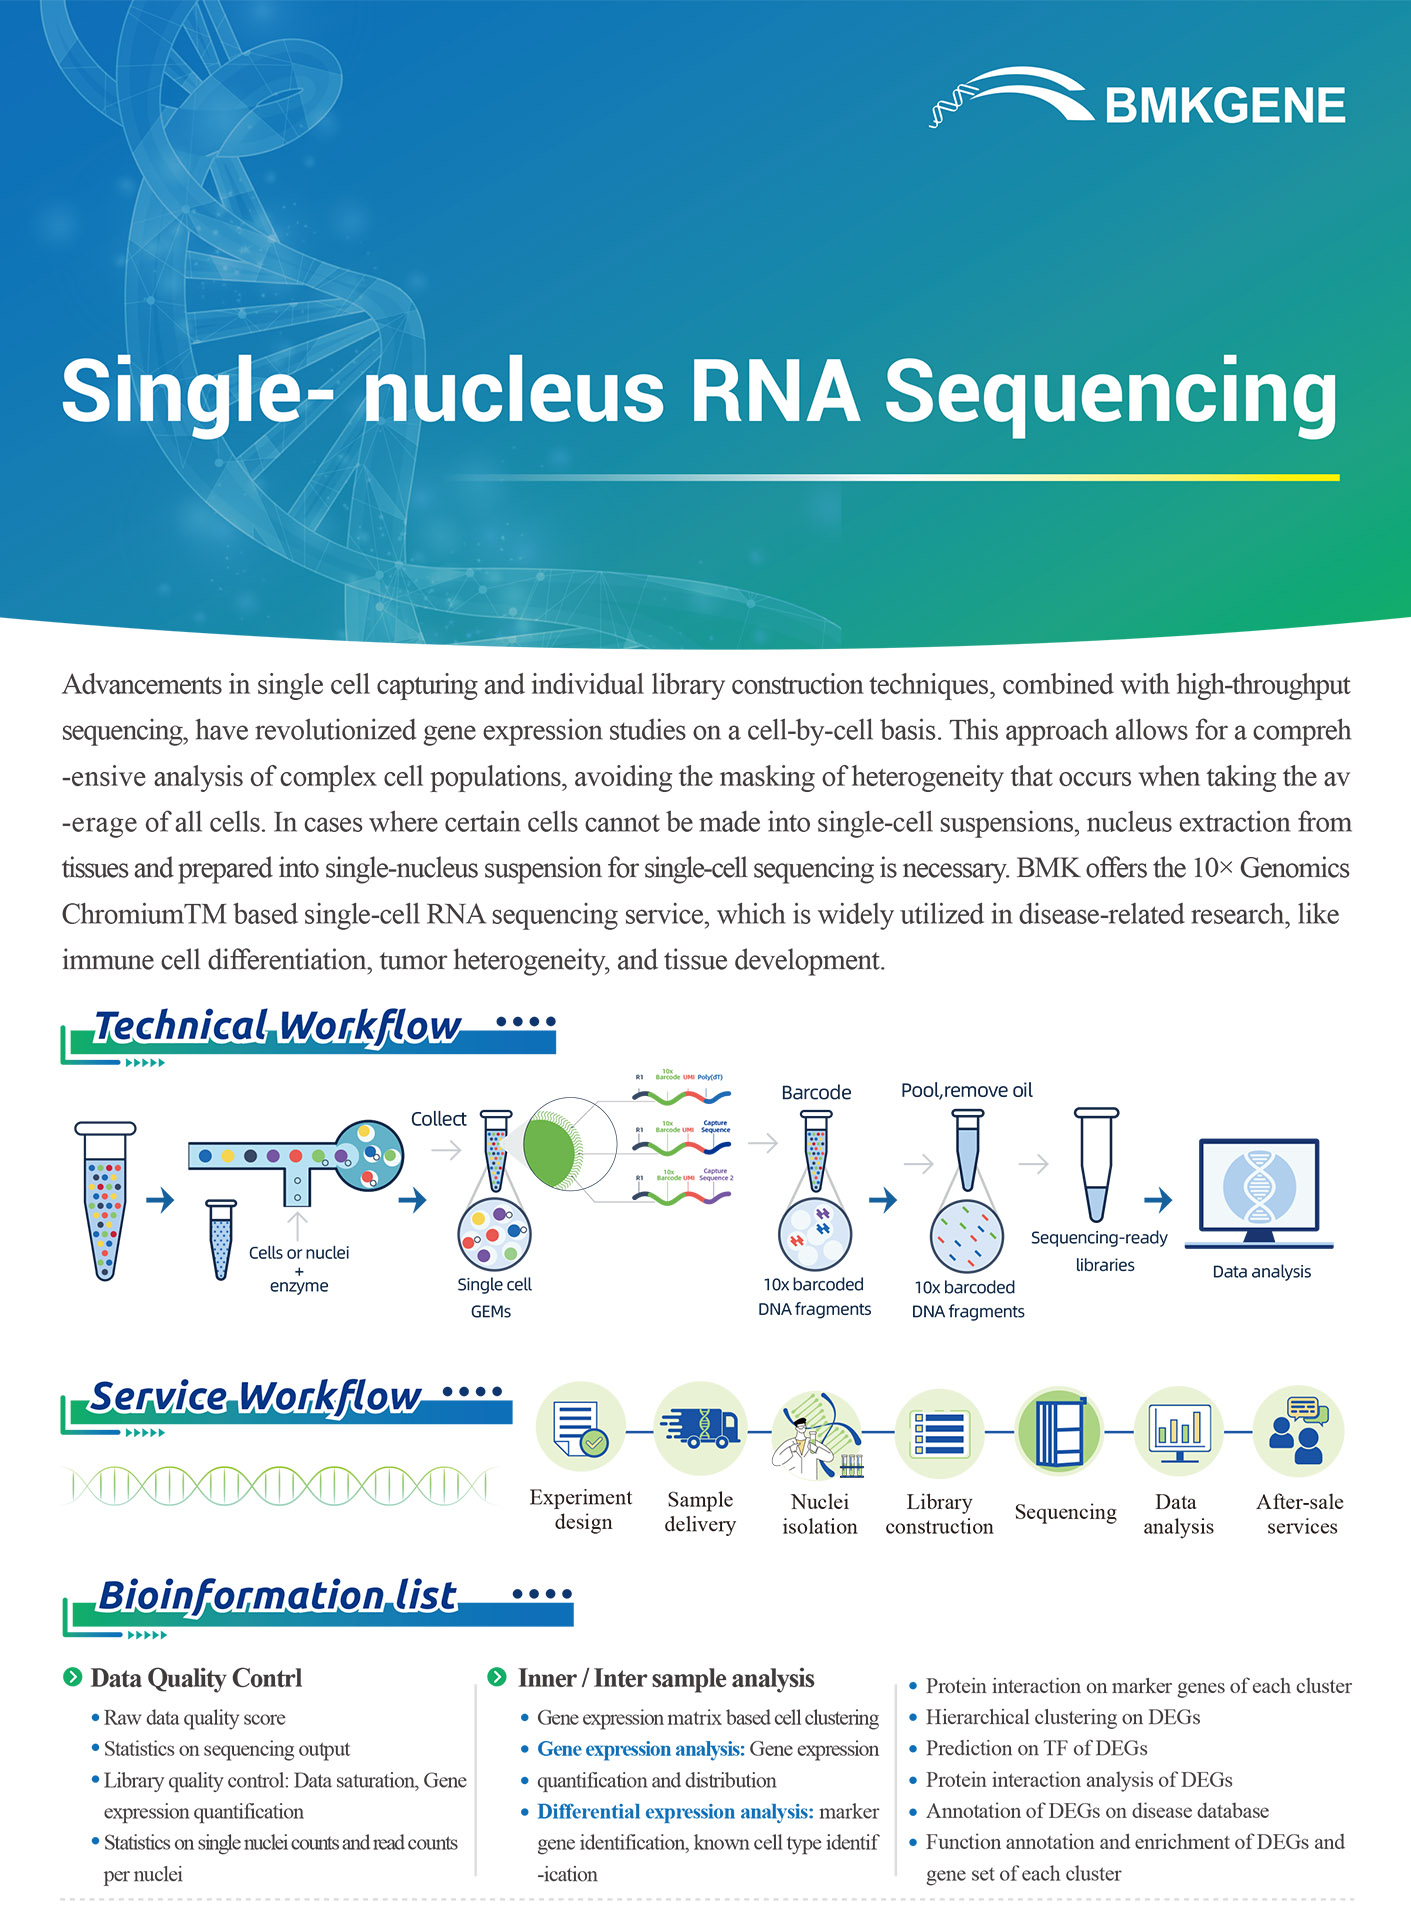 https://www.bmkgene.com/uploads/Single-nucleus-RNA-Sequencing-BMKGENE-2310.pdf